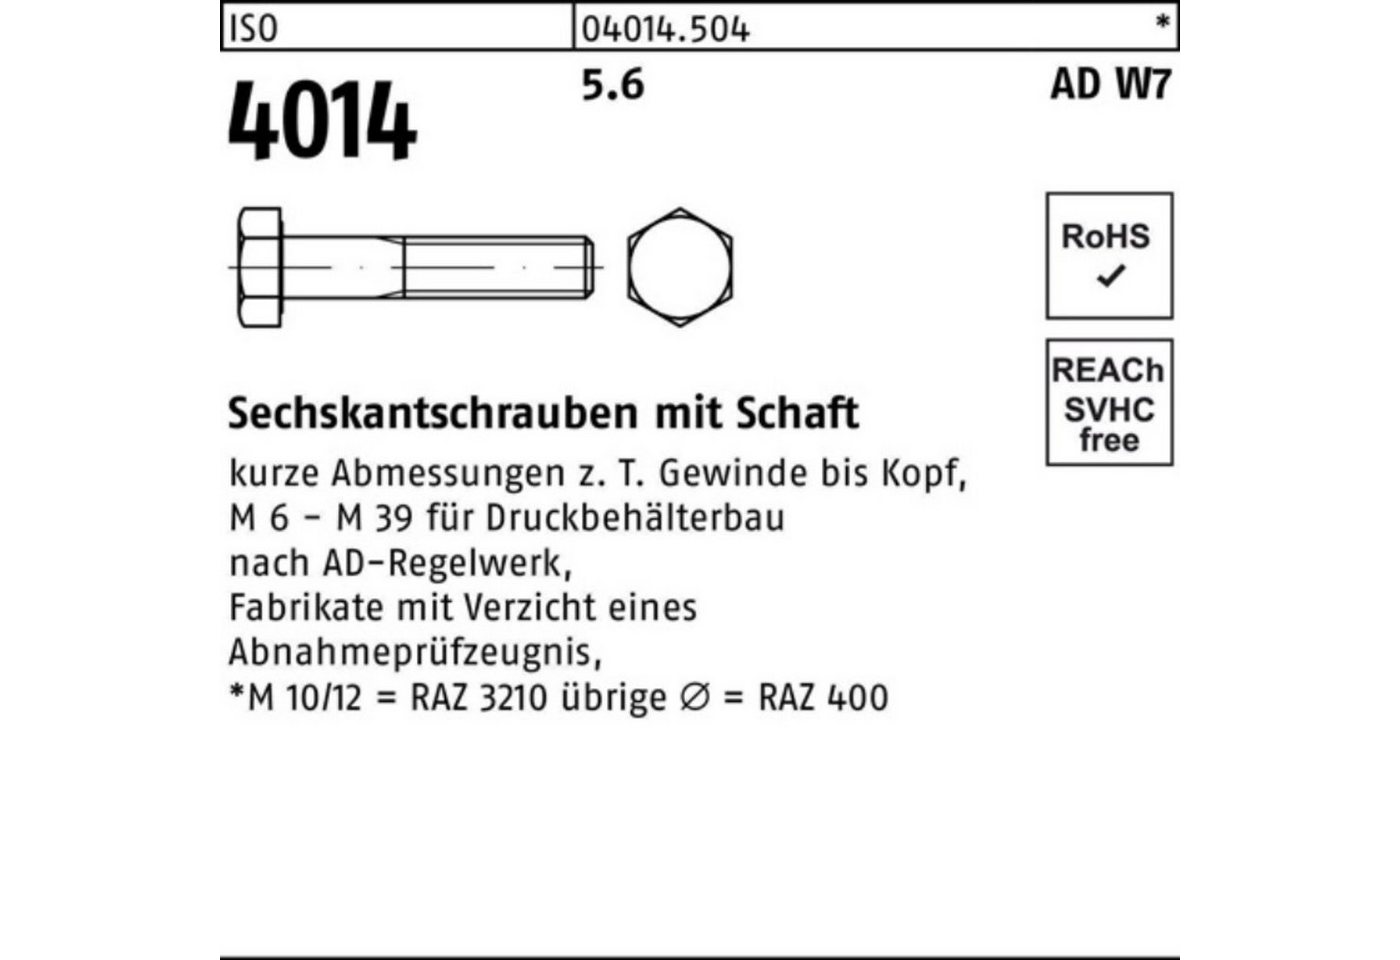 Bufab Sechskantschraube 100er Pack Sechskantschraube ISO 4014 Schaft M39x 180 5.6 W7 1 Stück von Bufab